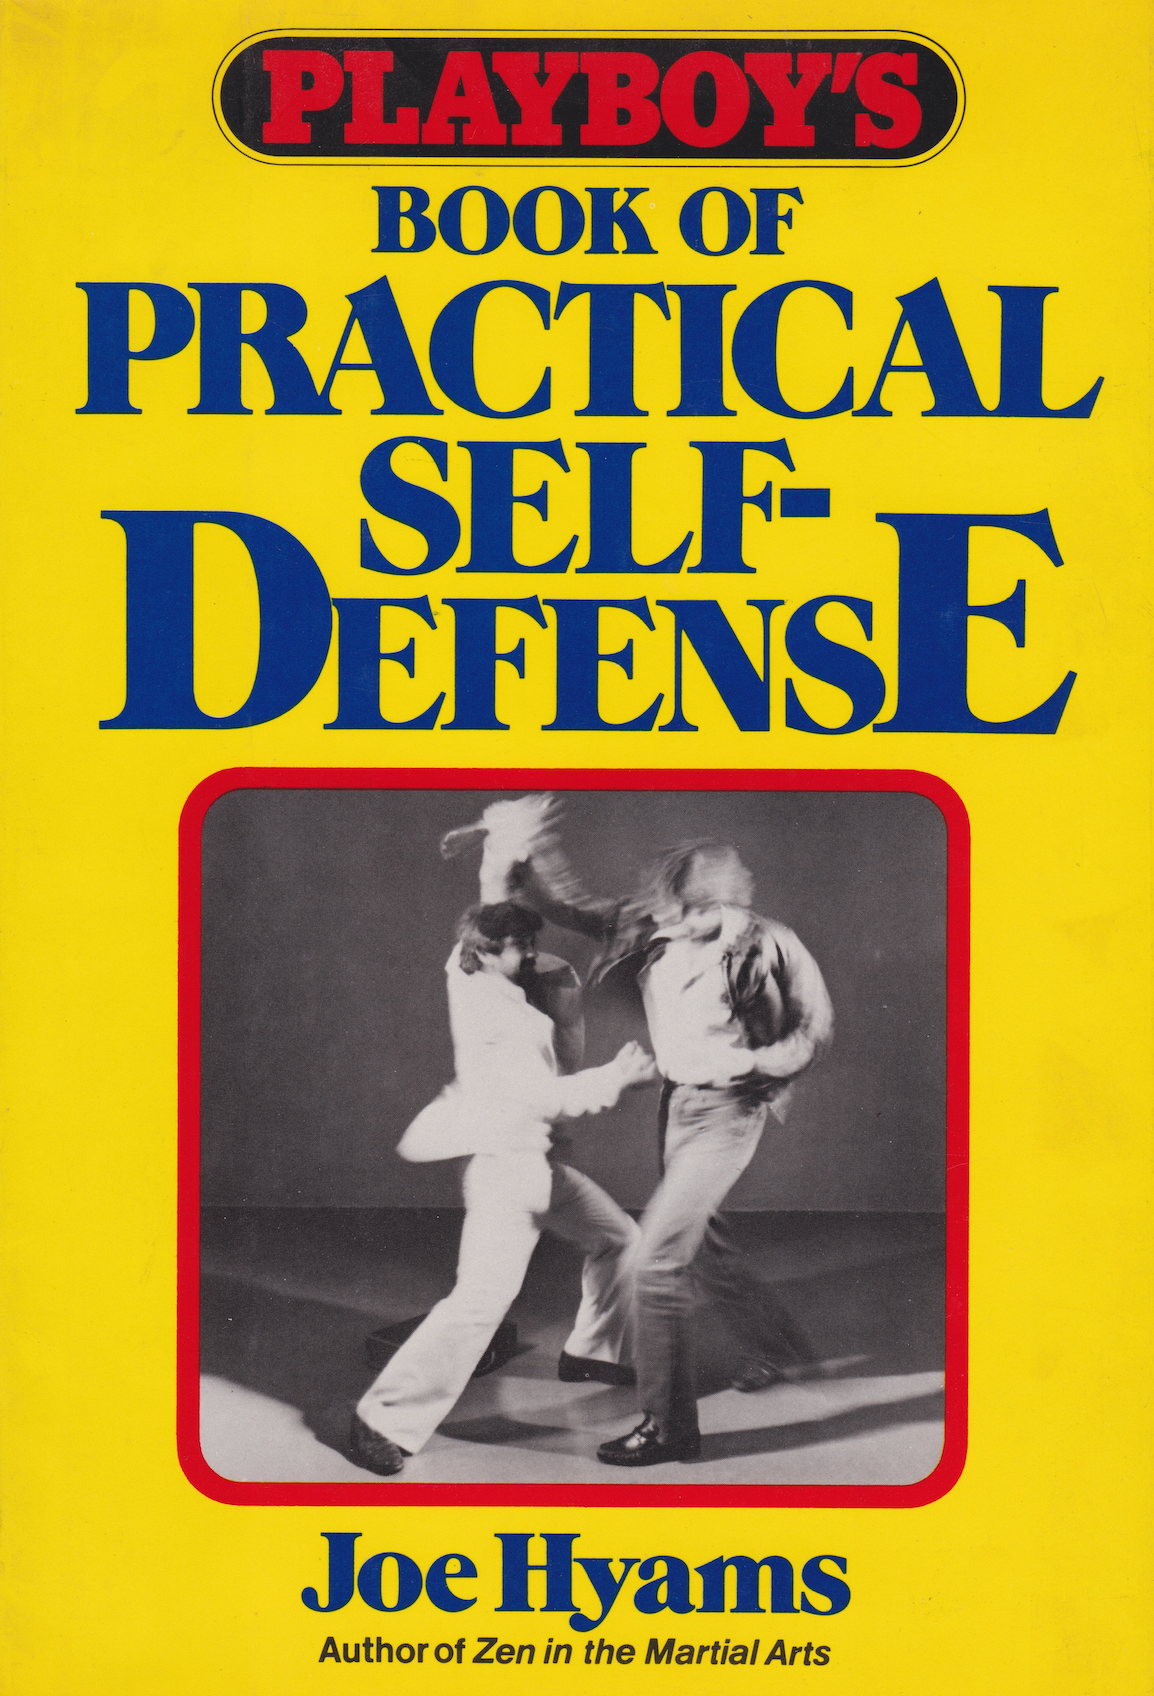 Playboy's Book of Practical Self Defense by Joe Hyams (Hardcover) (Preowned)